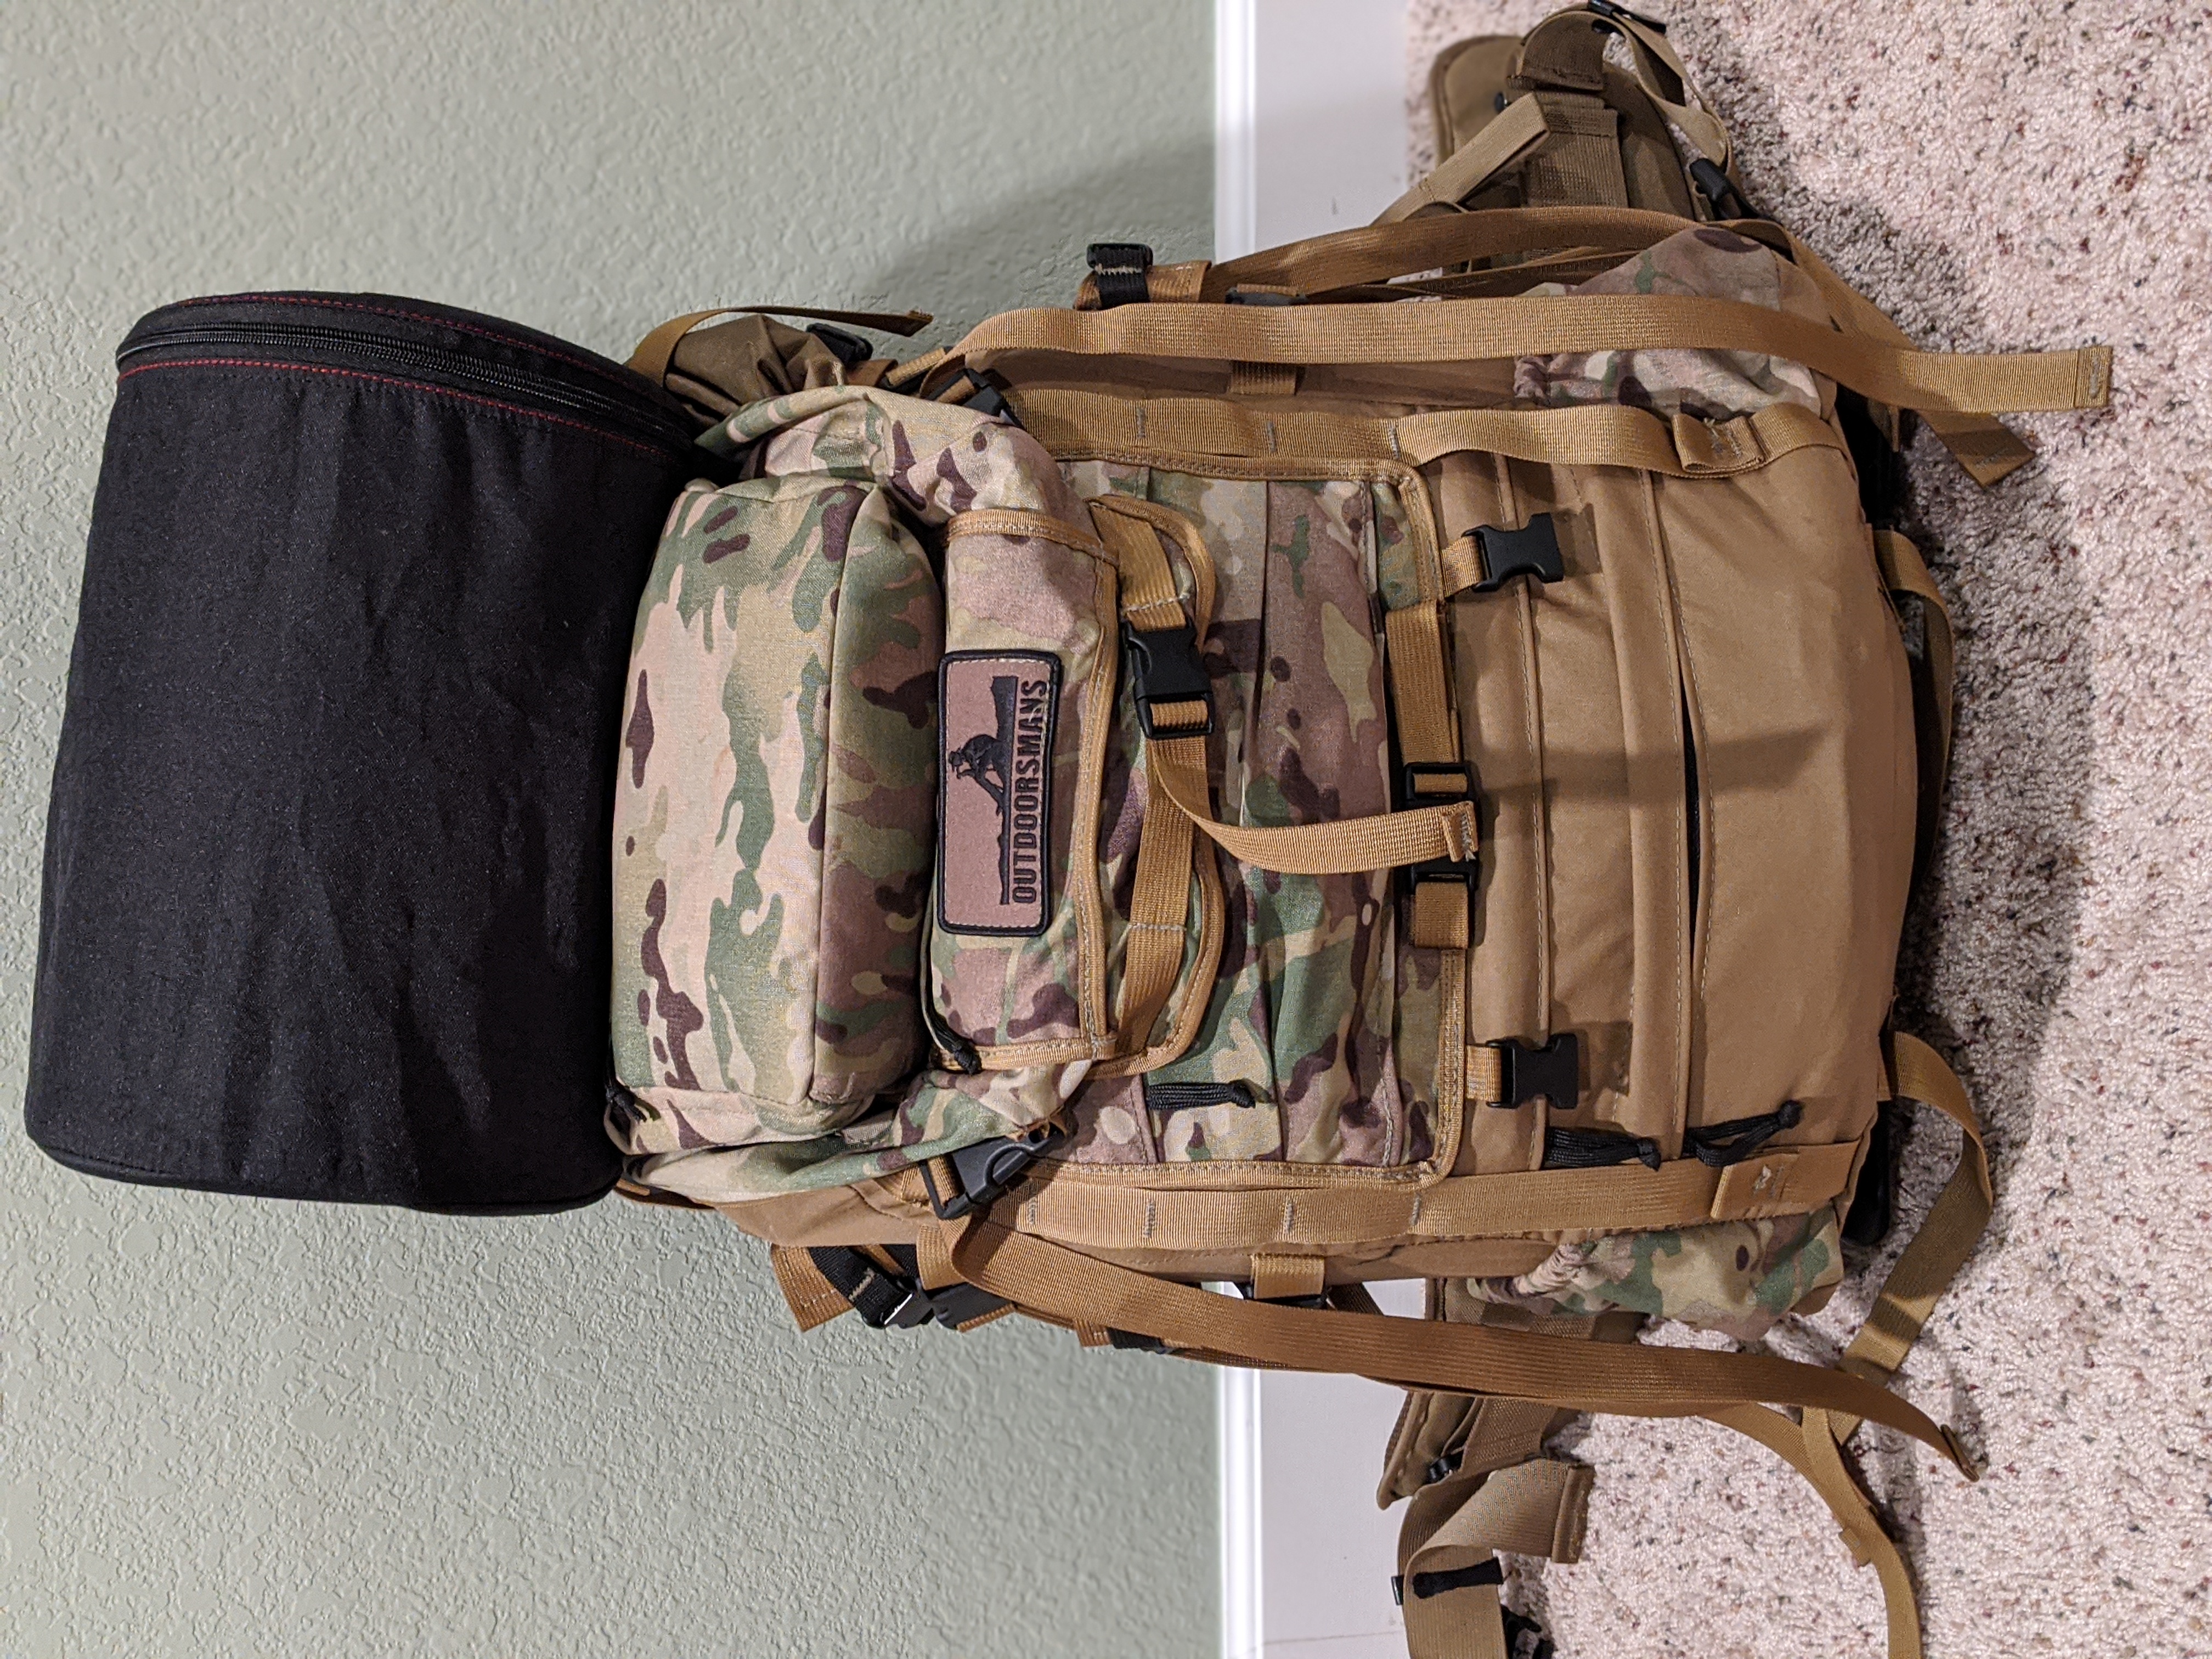 The Counter Assault Bear Keg in it's storage bag atop my Outdoorsman's Long Range bag.